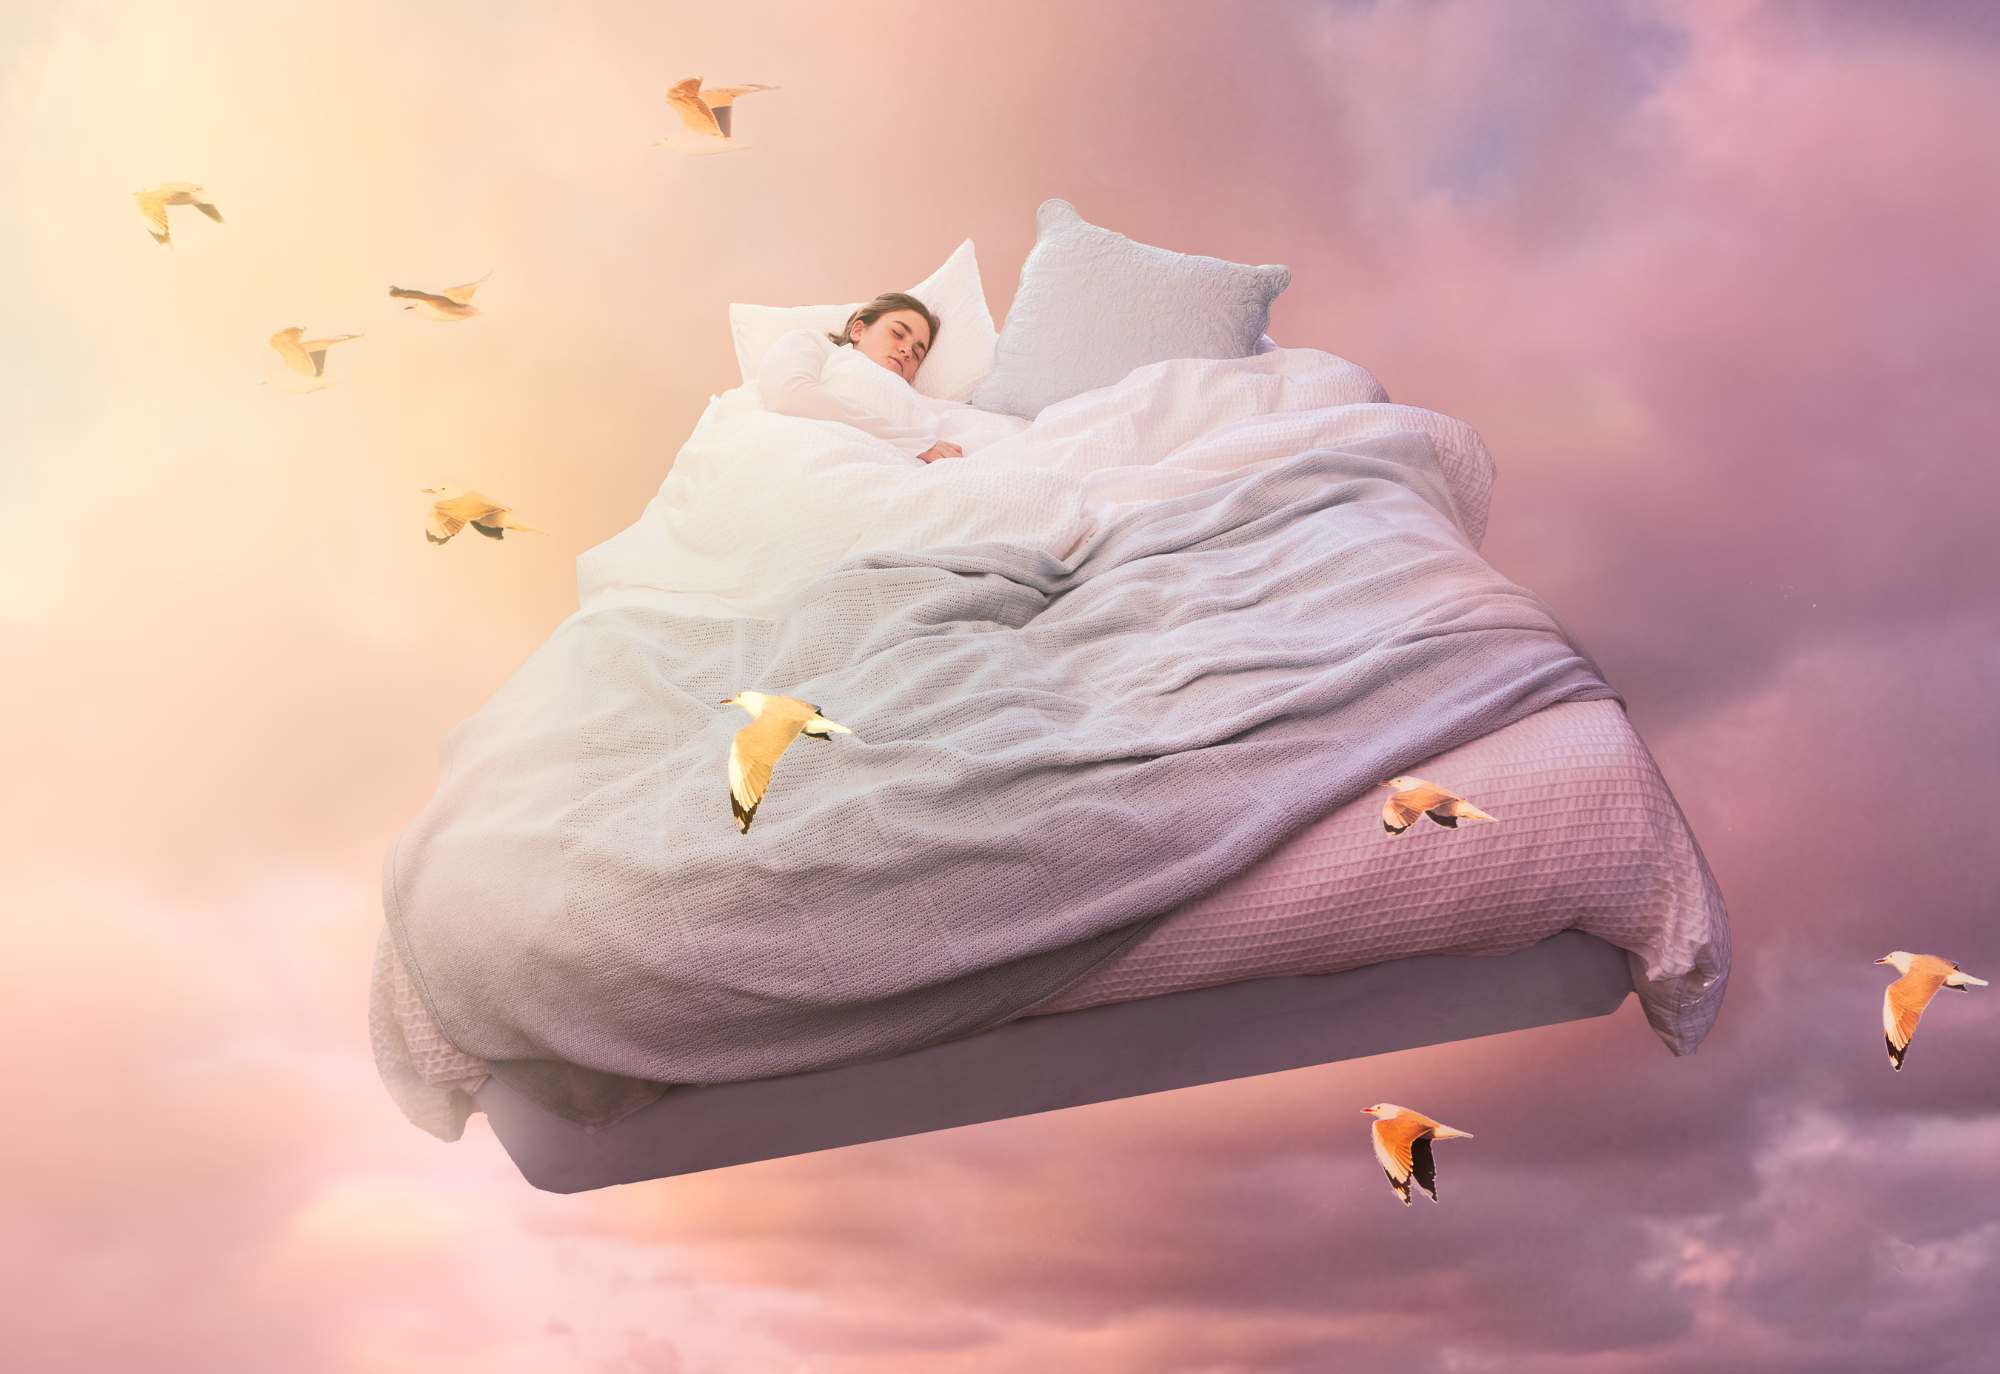 Beyond Sleep Dream Interpretation